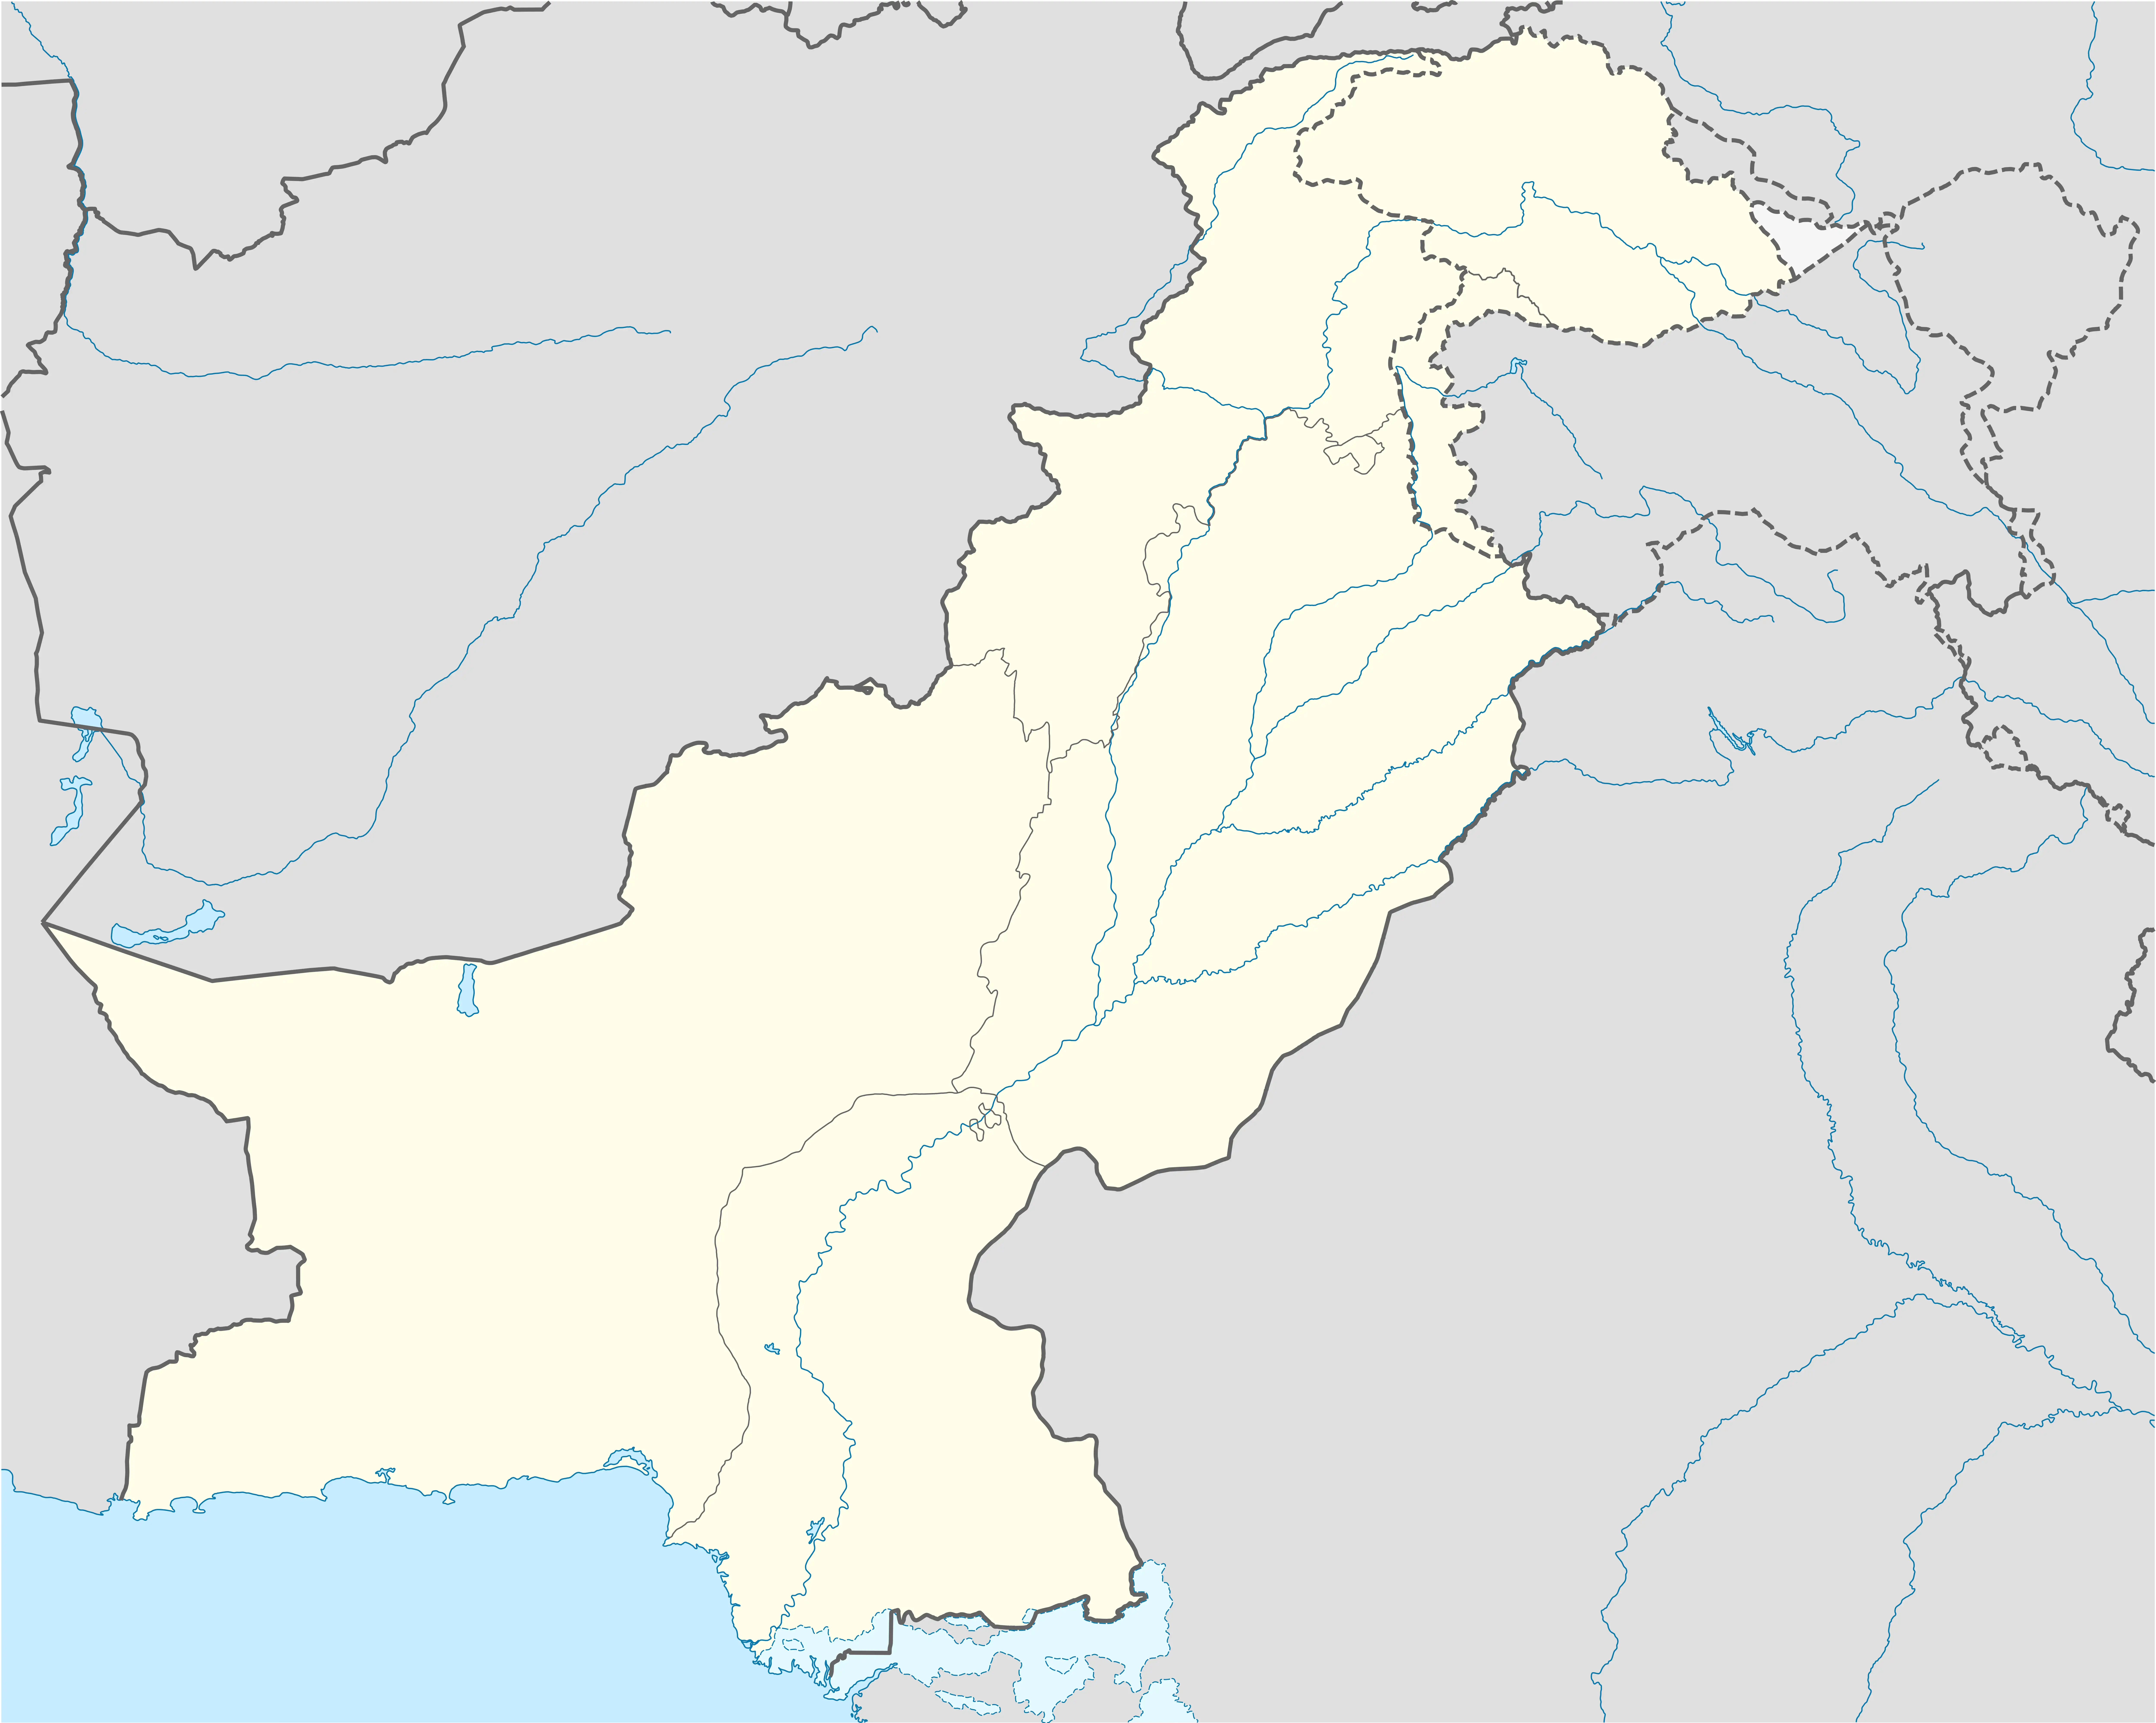 Umerkot (Amarkot) is located in Pakistan